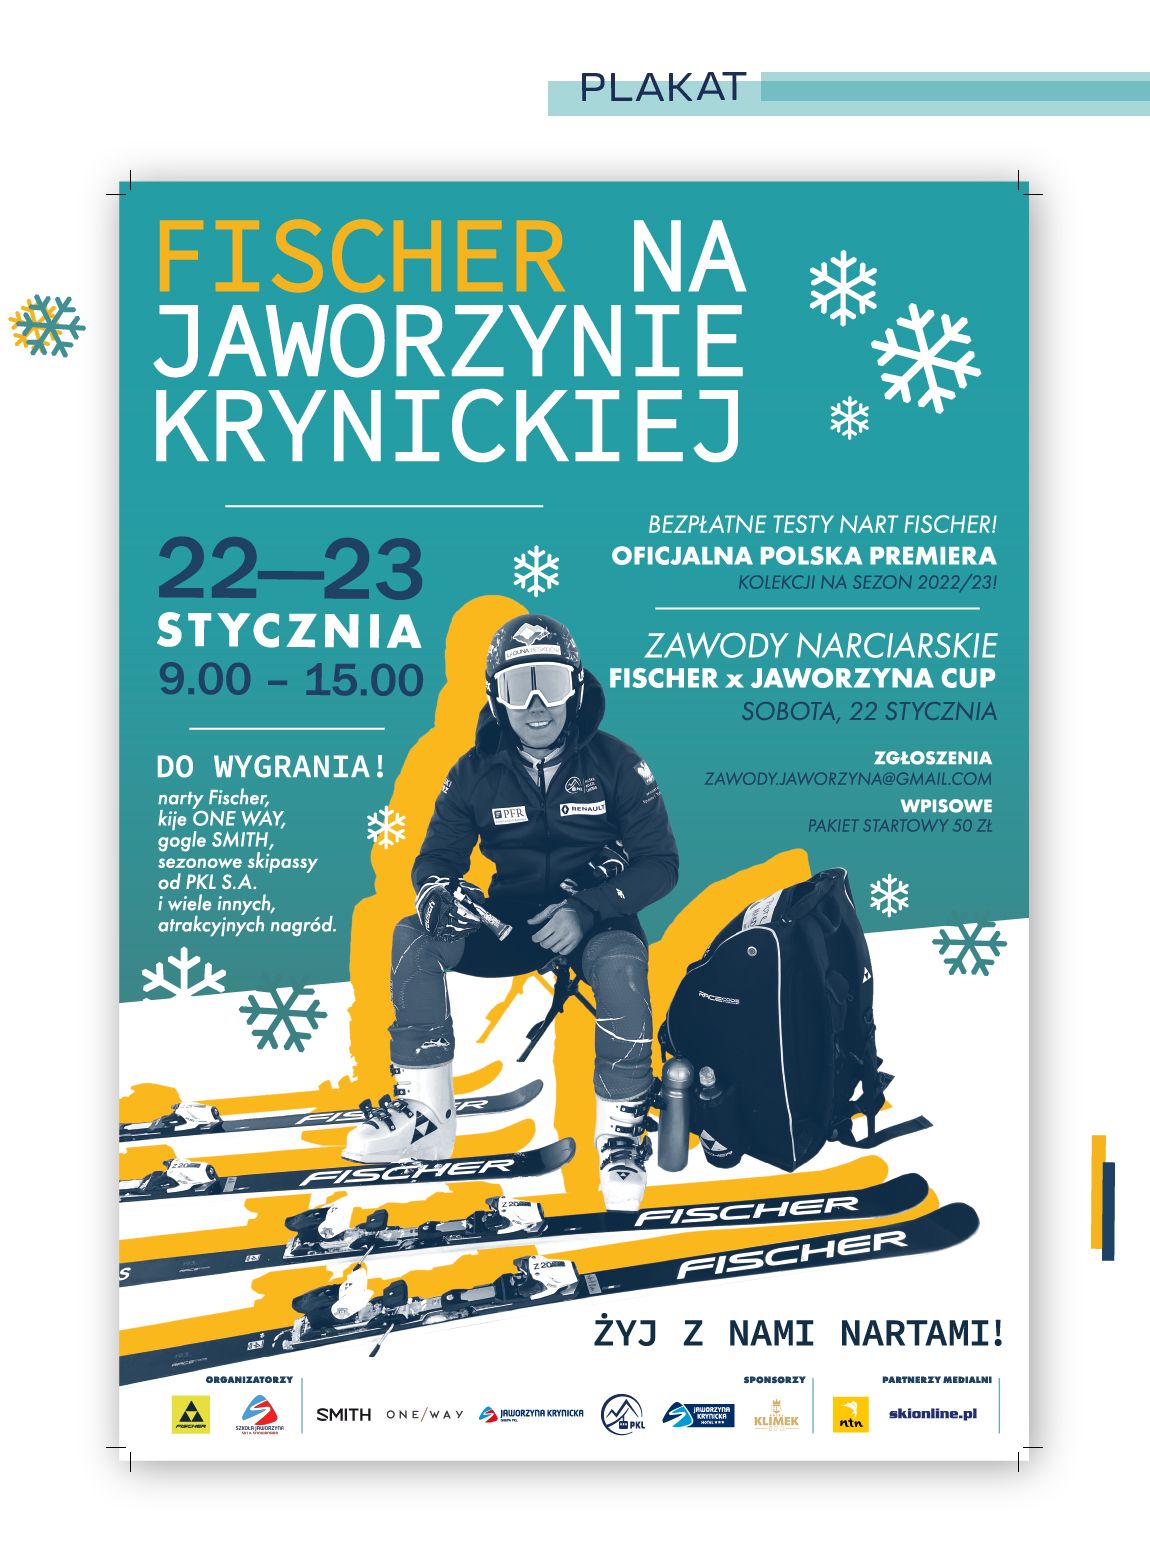 fischer-jaworzyna-krynicka-event-branding_2